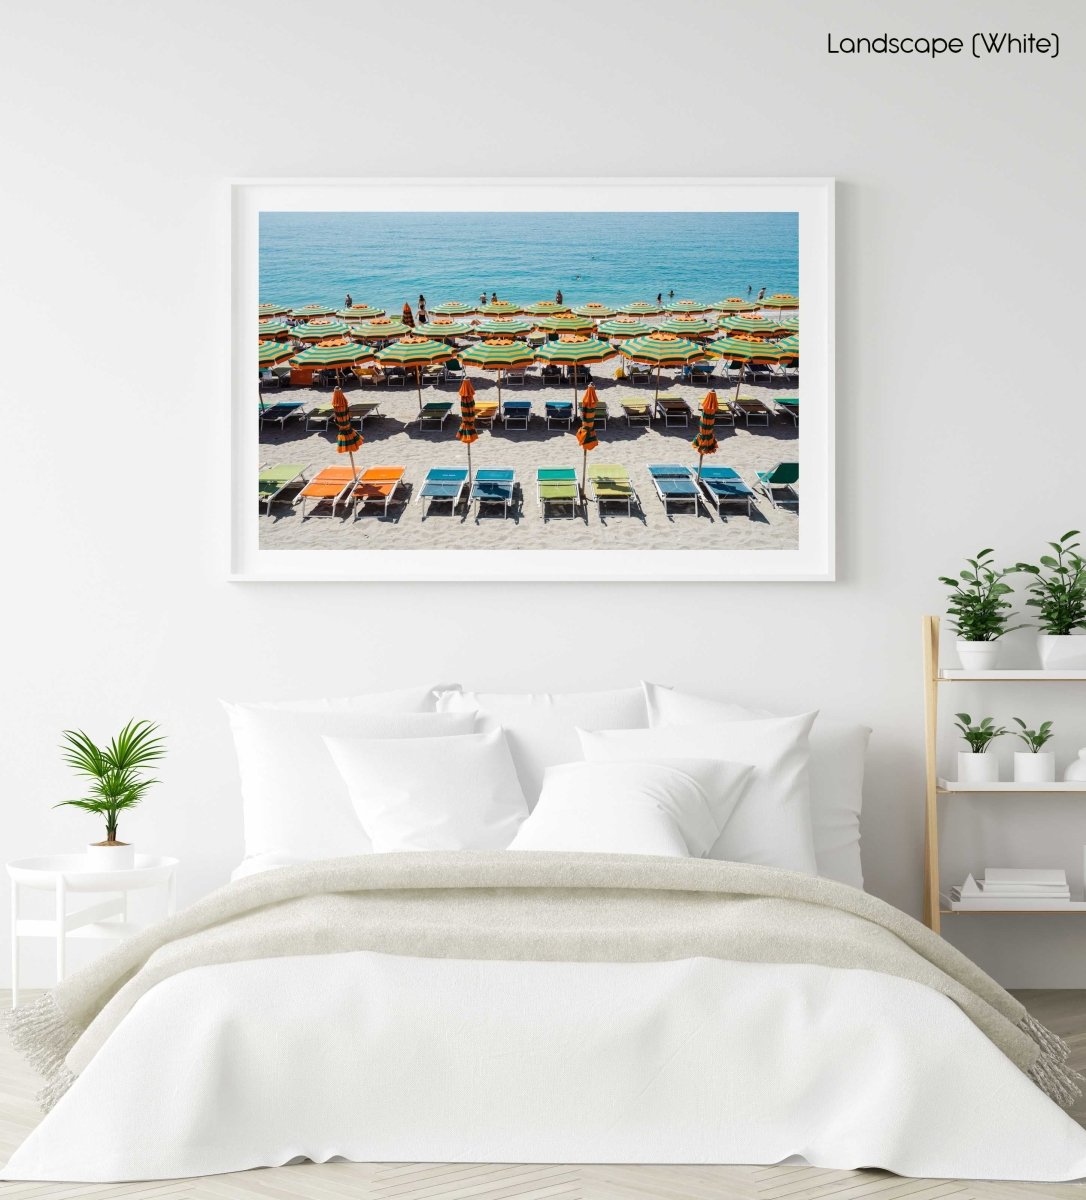 Orange, green and blue colors of umbrellas and sea in Cinque Terre in a white fine art frame